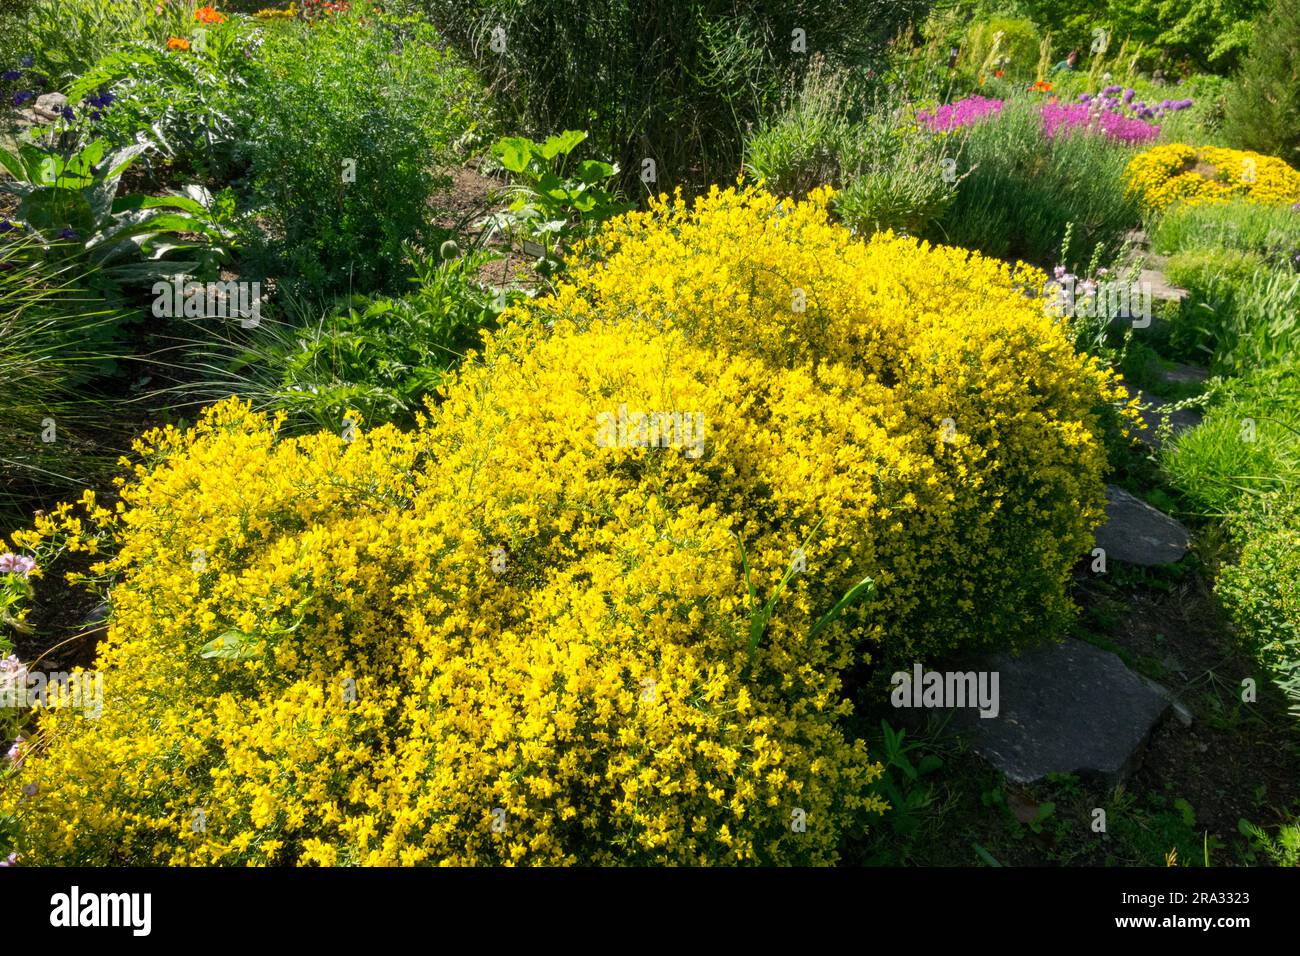 Jaune, Genista lydia, Garden Lydian Broom, Genista jardin jaune bas arbuste prostré Banque D'Images